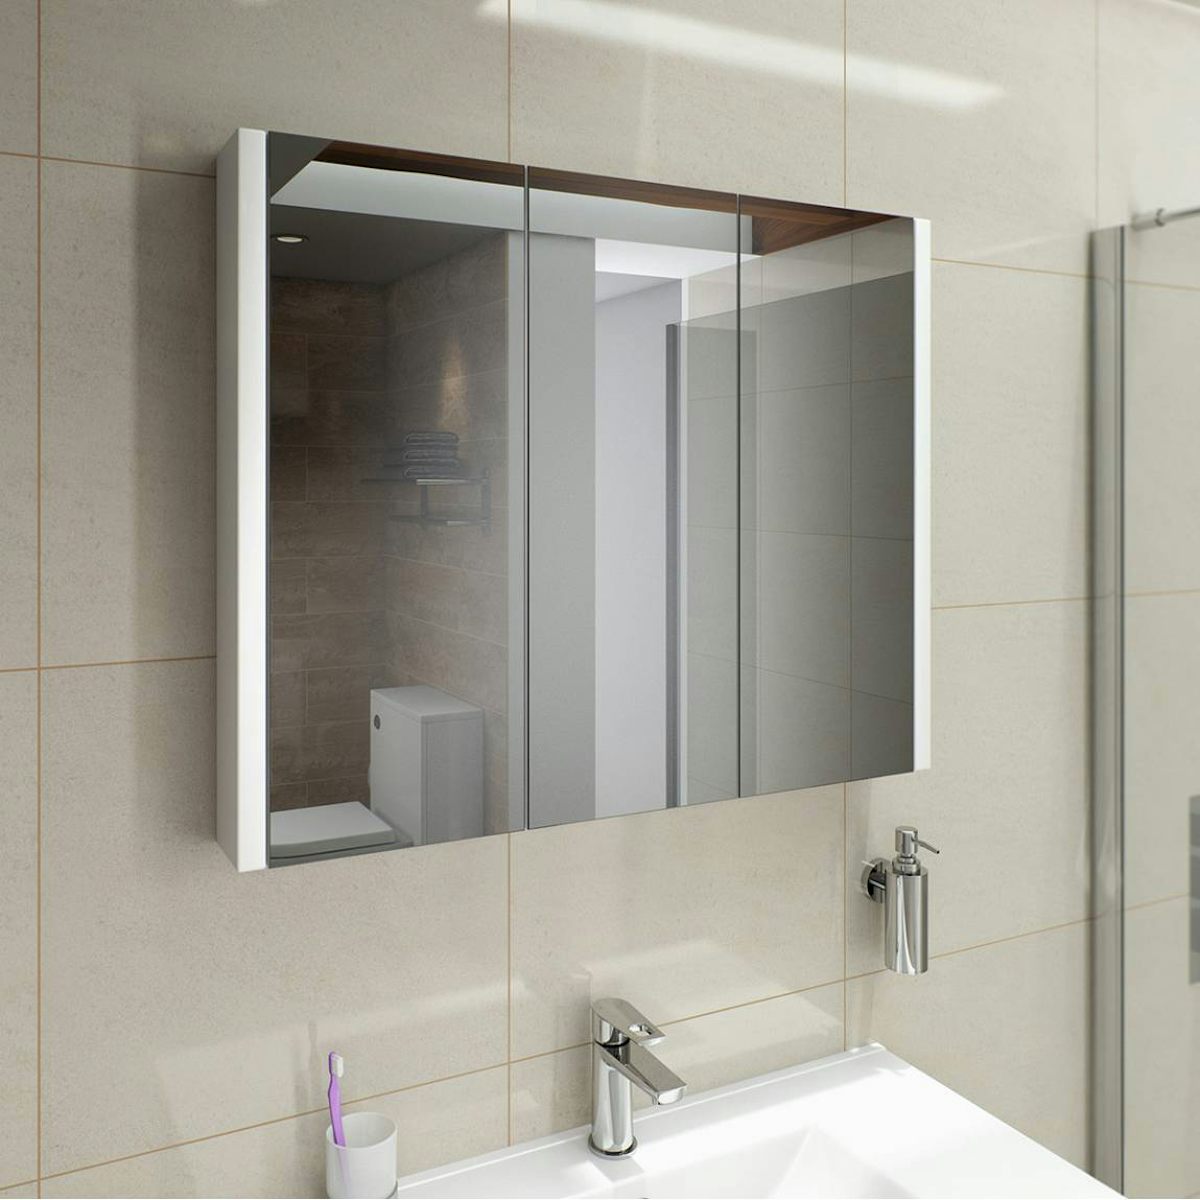 View Bathroom Mirror Cabinet Images - kitchen design ideas simple